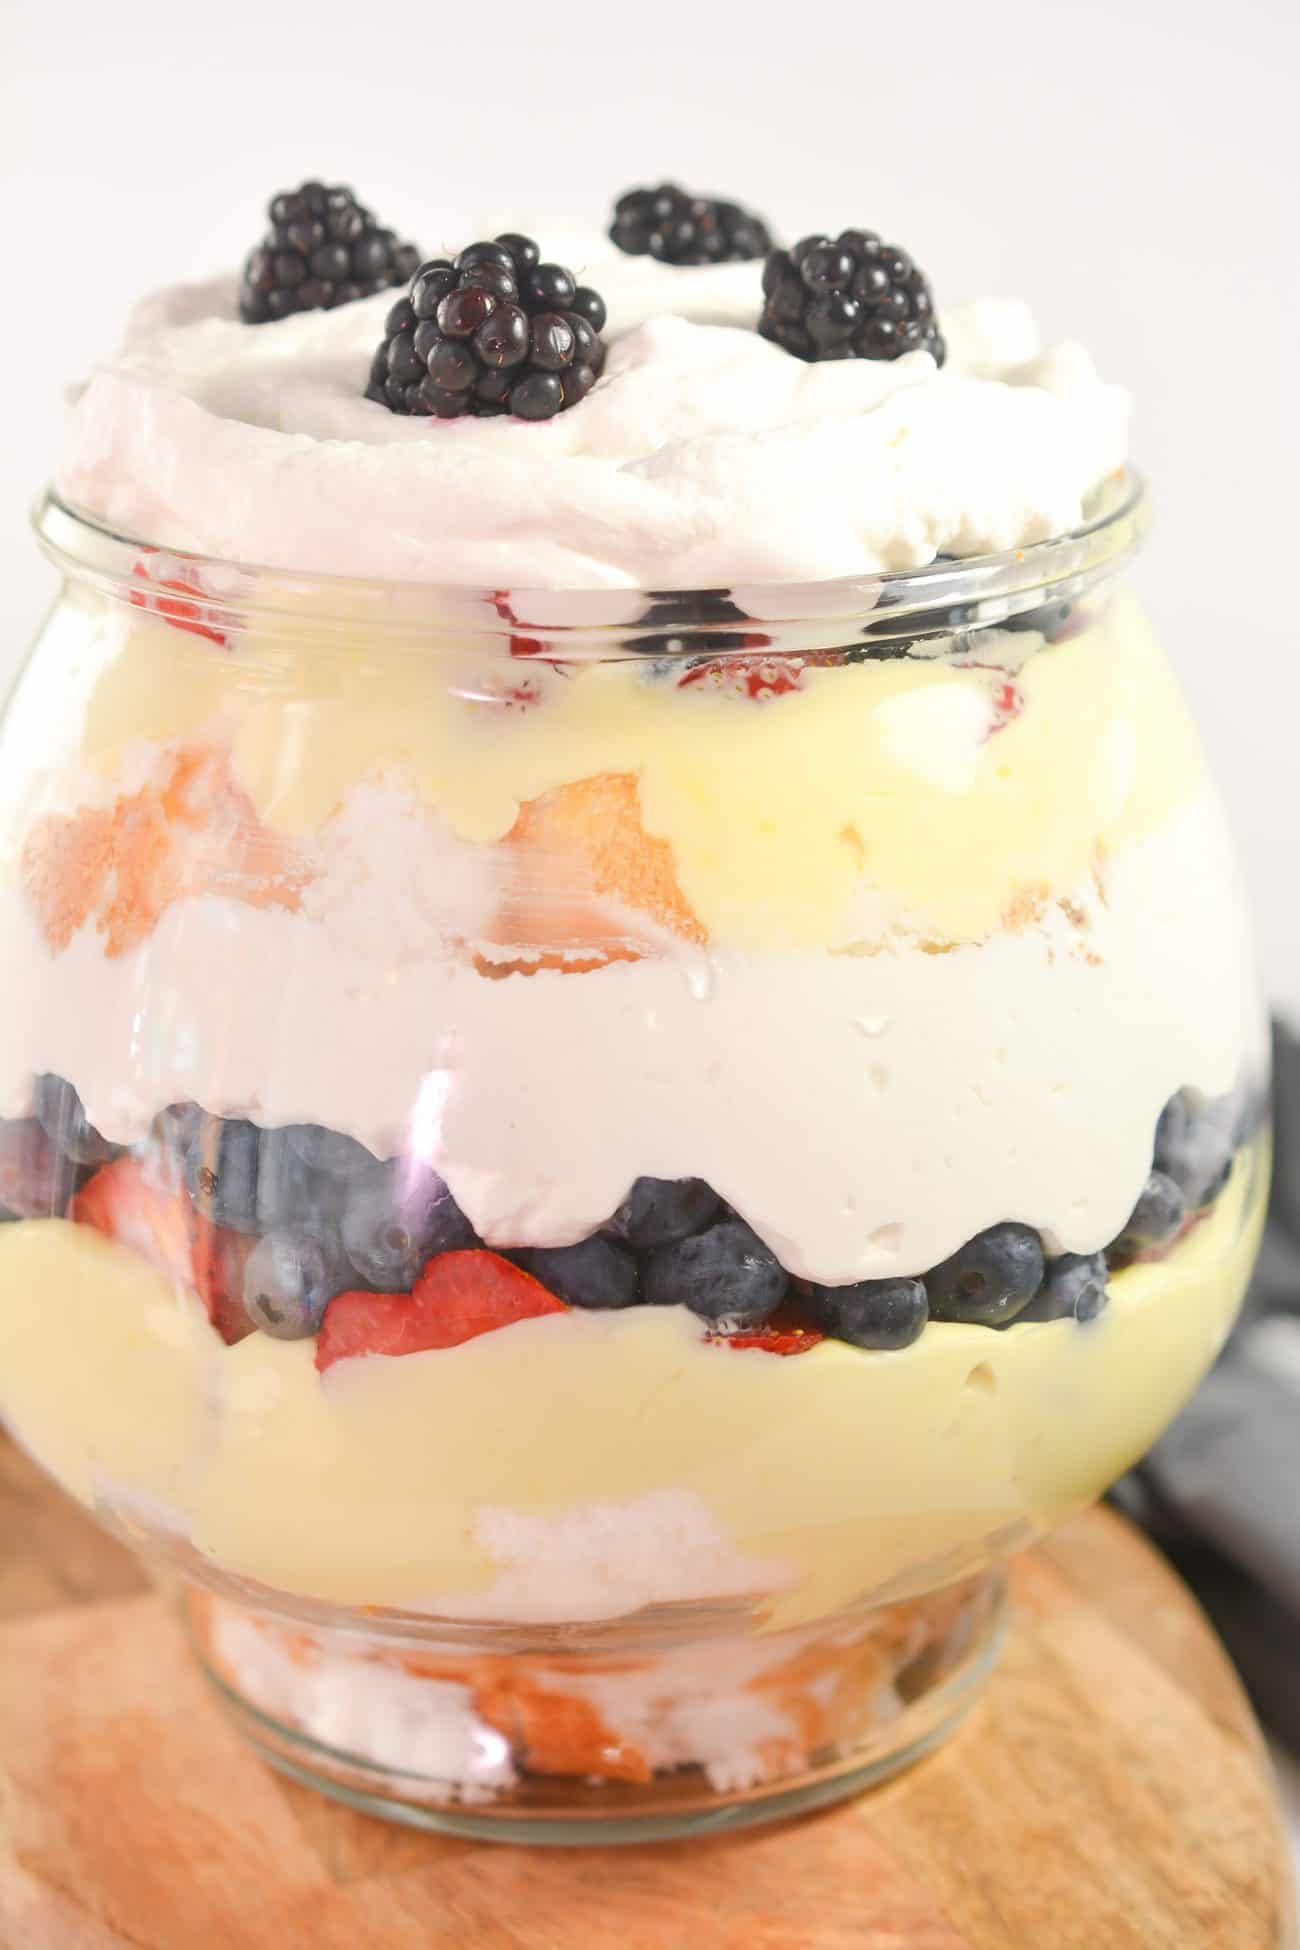 Lemon Berry Trifle recipe